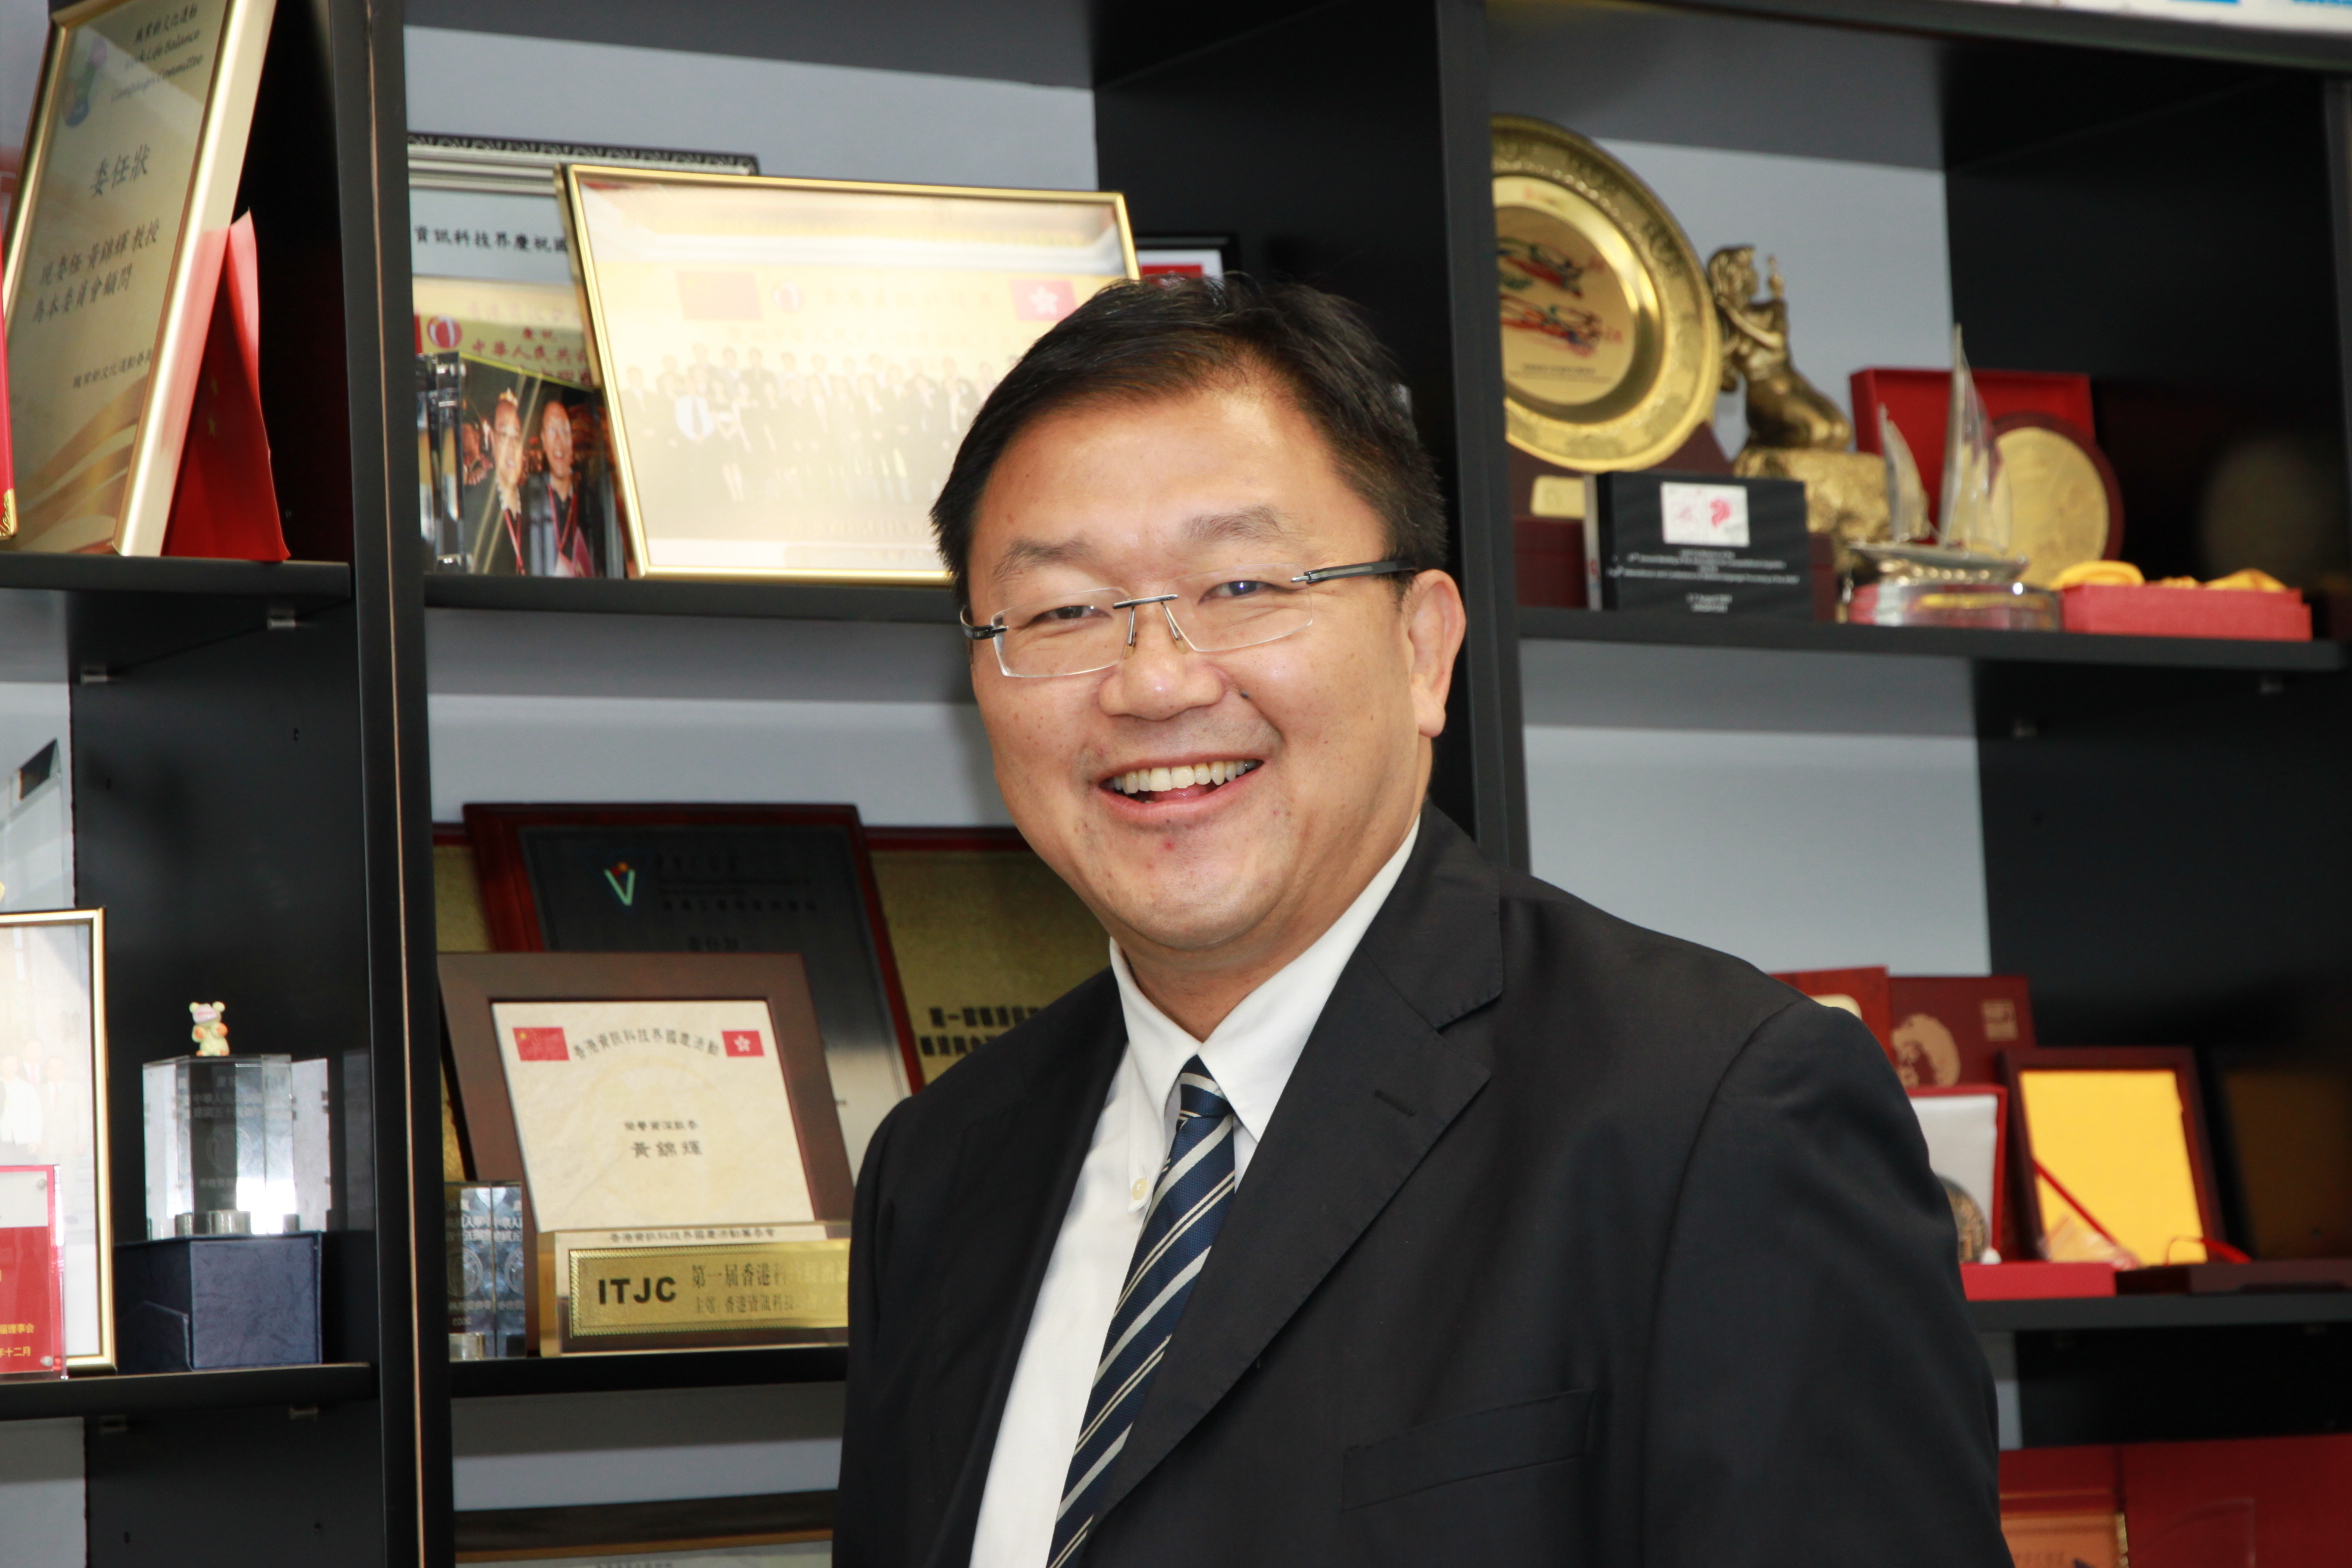 Prof. Kam Fai Wong won the award 2022 年中国中文信息学会科学技术奖: “钱伟长中文信息处理科学技术奖” 一等奖